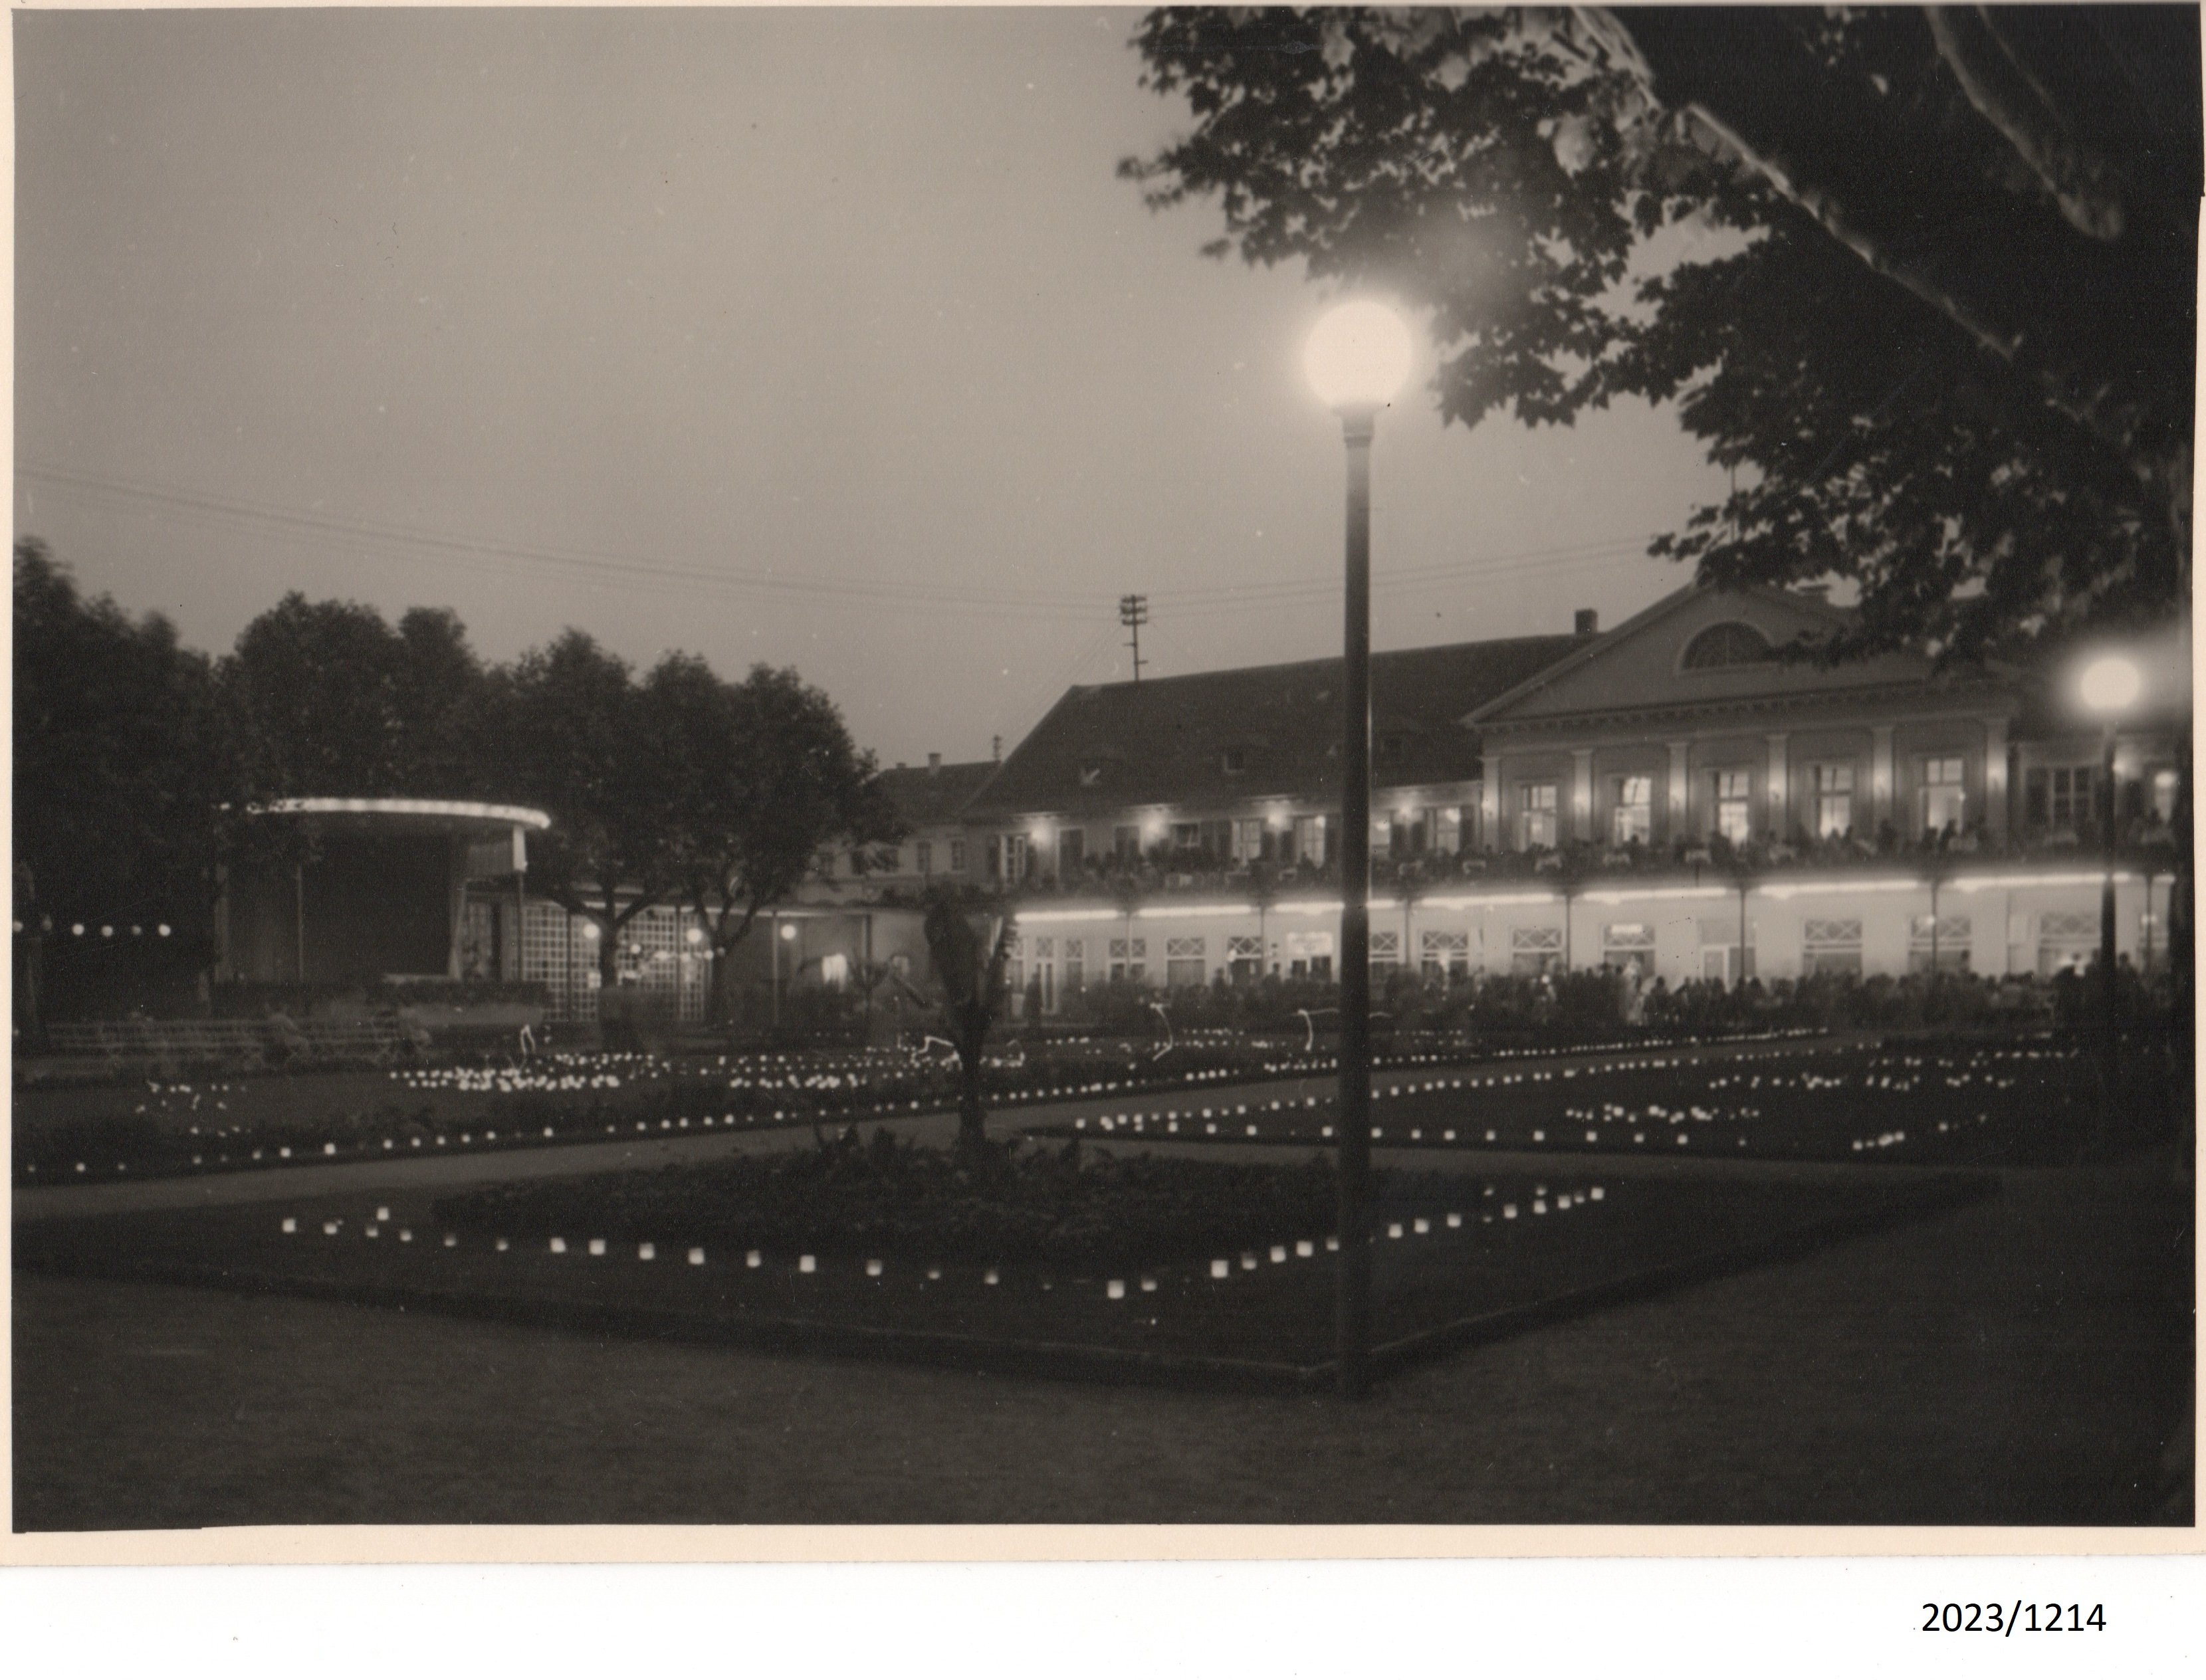 Bad Dürkheim, Kurhaus und Kurgarten bei Nacht, 1950er Jahre (Stadtmuseum Bad Dürkheim im Kulturzentrum Haus Catoir CC BY-NC-SA)